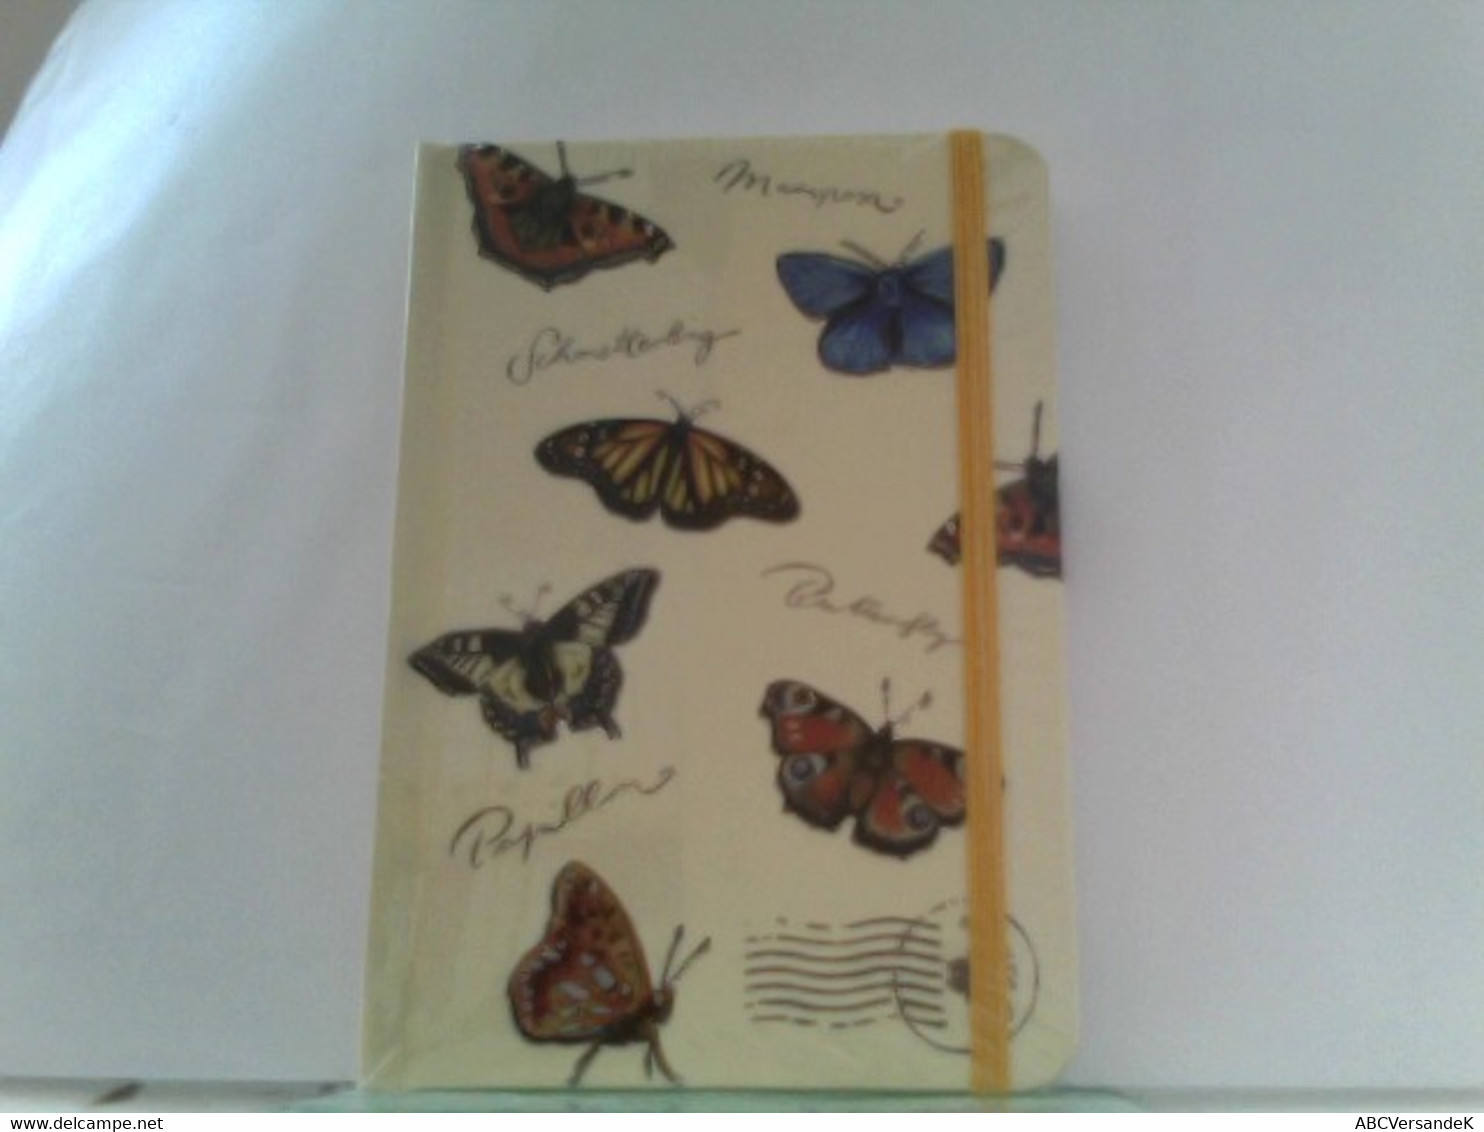 Notatnik Natur Fun-Butterfly - Otros Accesorios